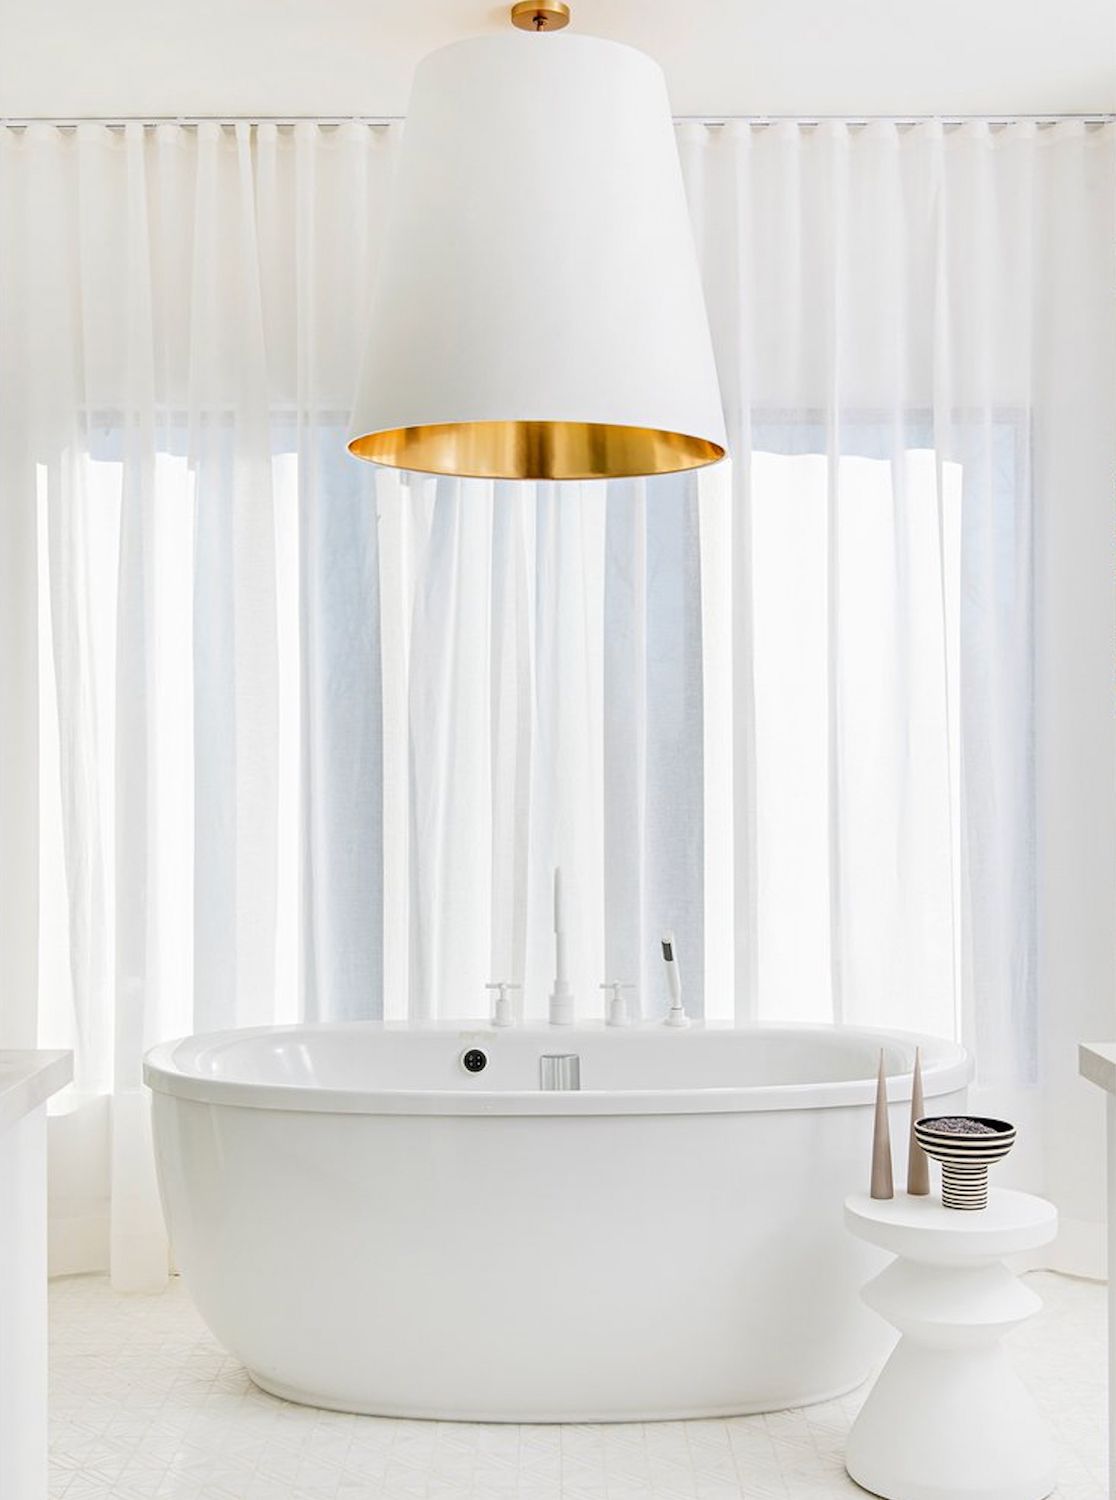 salle de bain luxueuse avec lampe suspendue surdimensionnée